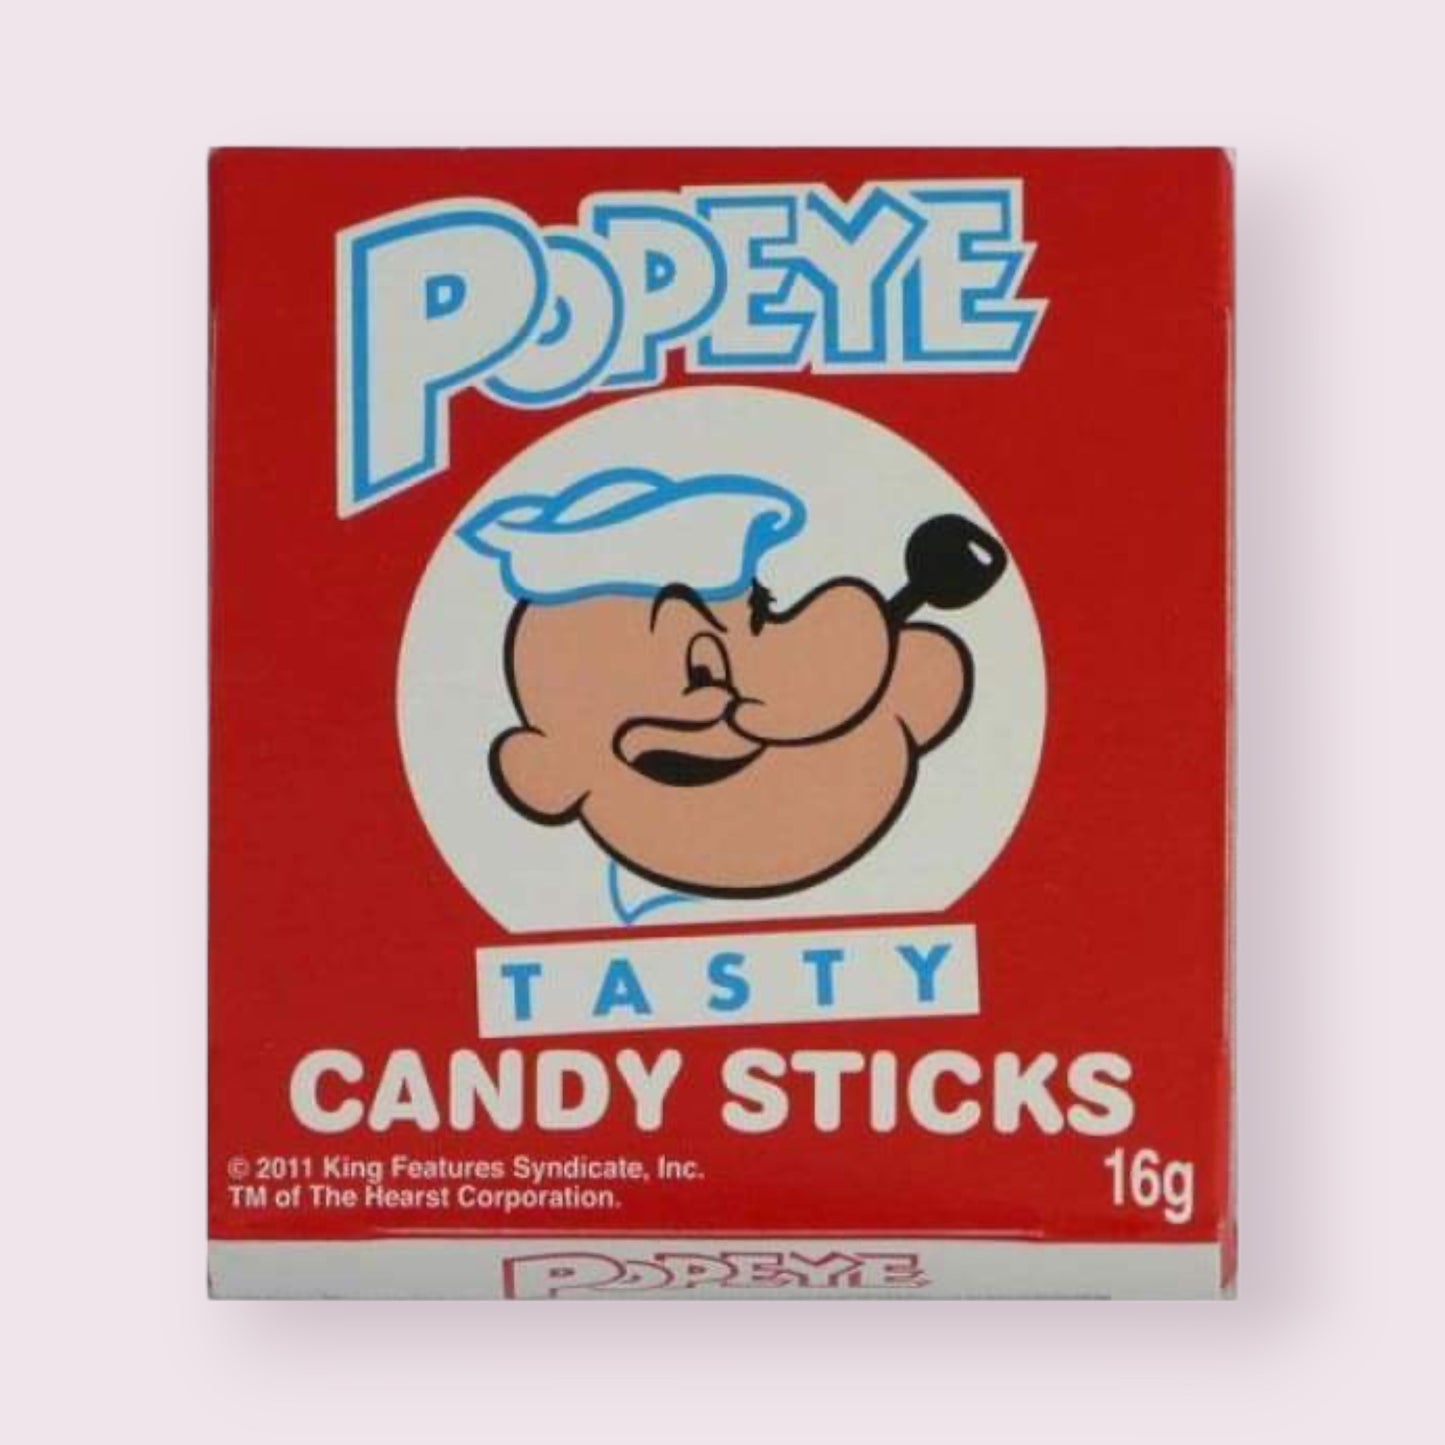 Popeye Candy Sticks Pack Retro Pixie Candy Shoppe   